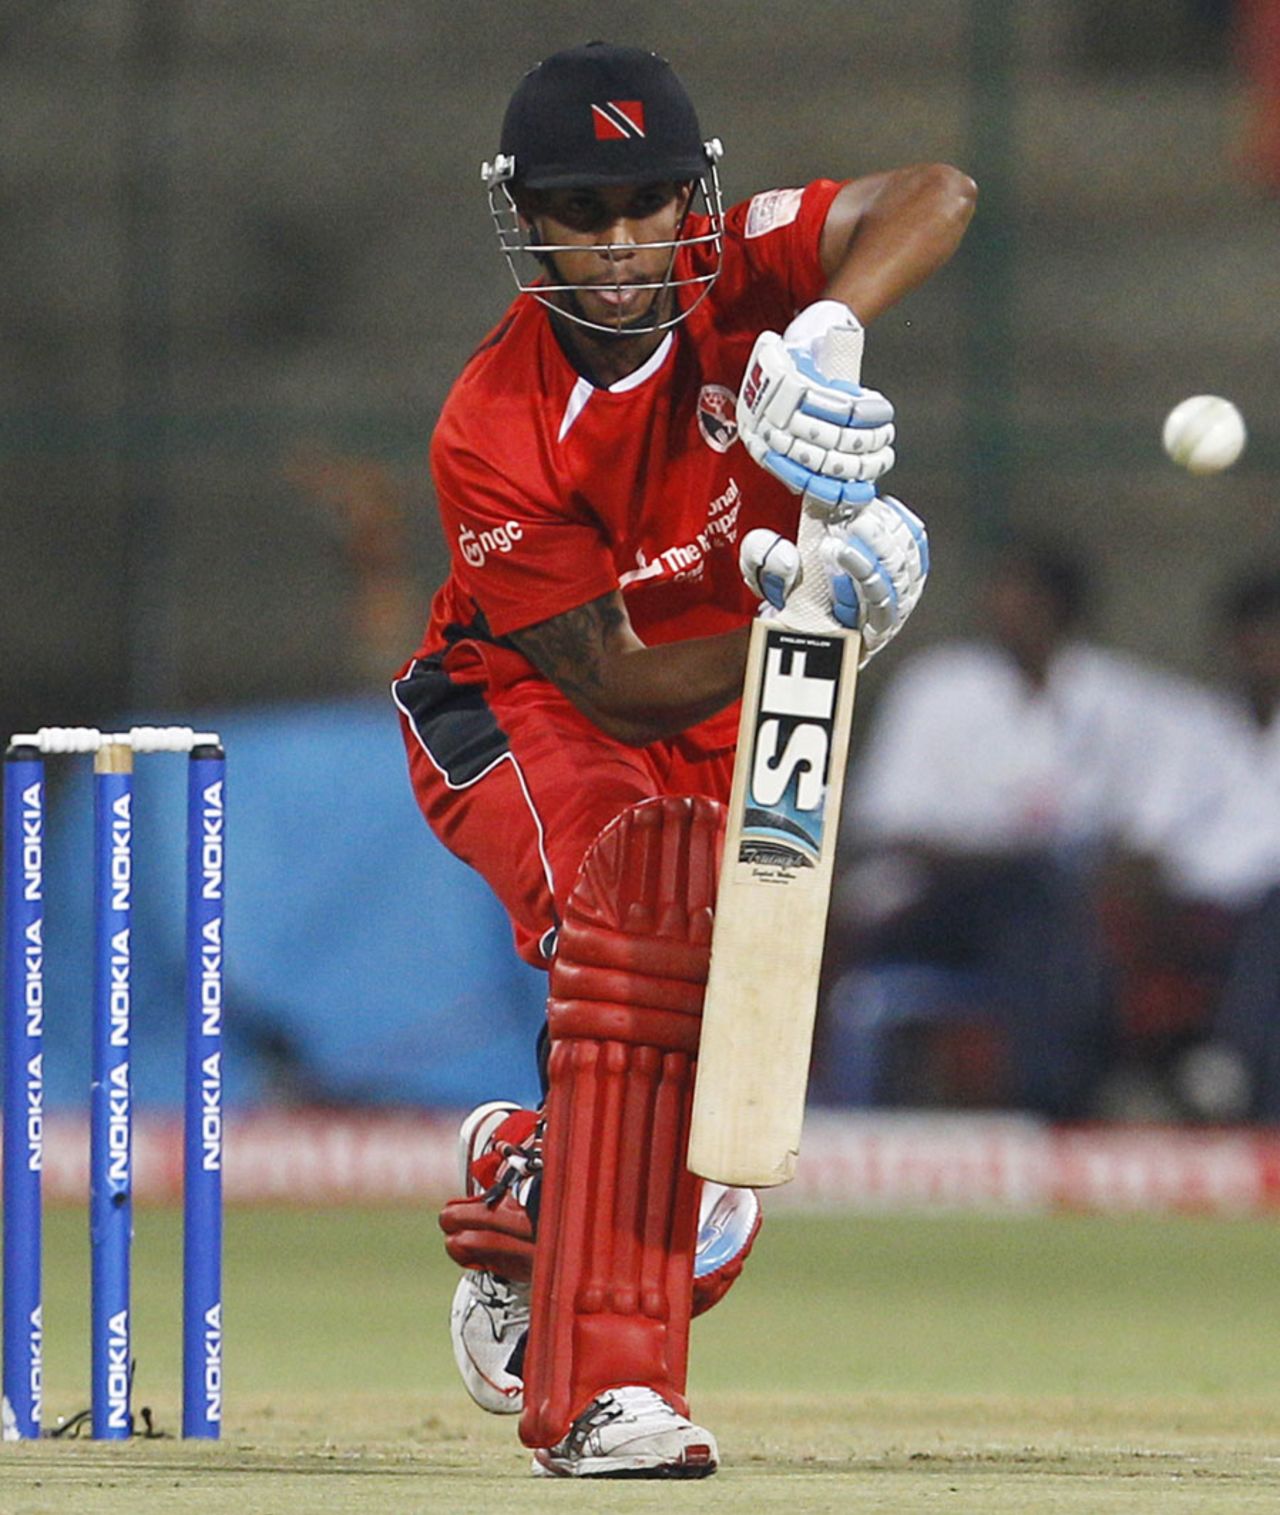 Lendl Simmons plays with a straight bat, Mumbai Indians v Trinidad & Tobago, Champions League T20, Bangalore, September 26, 2011